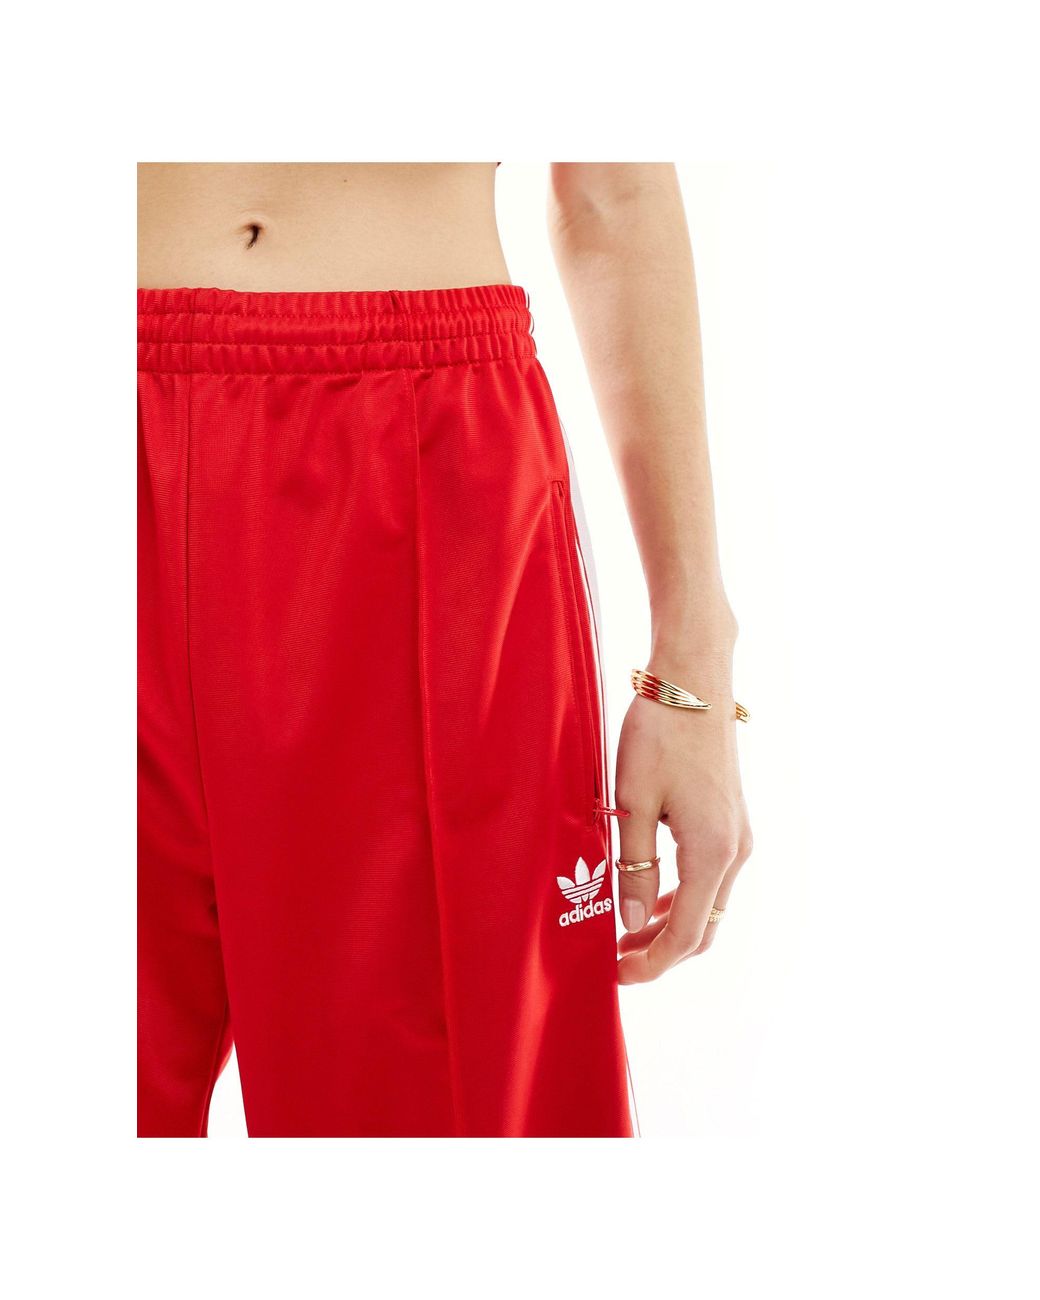 adidas Originals Firebird Track Pants in Red